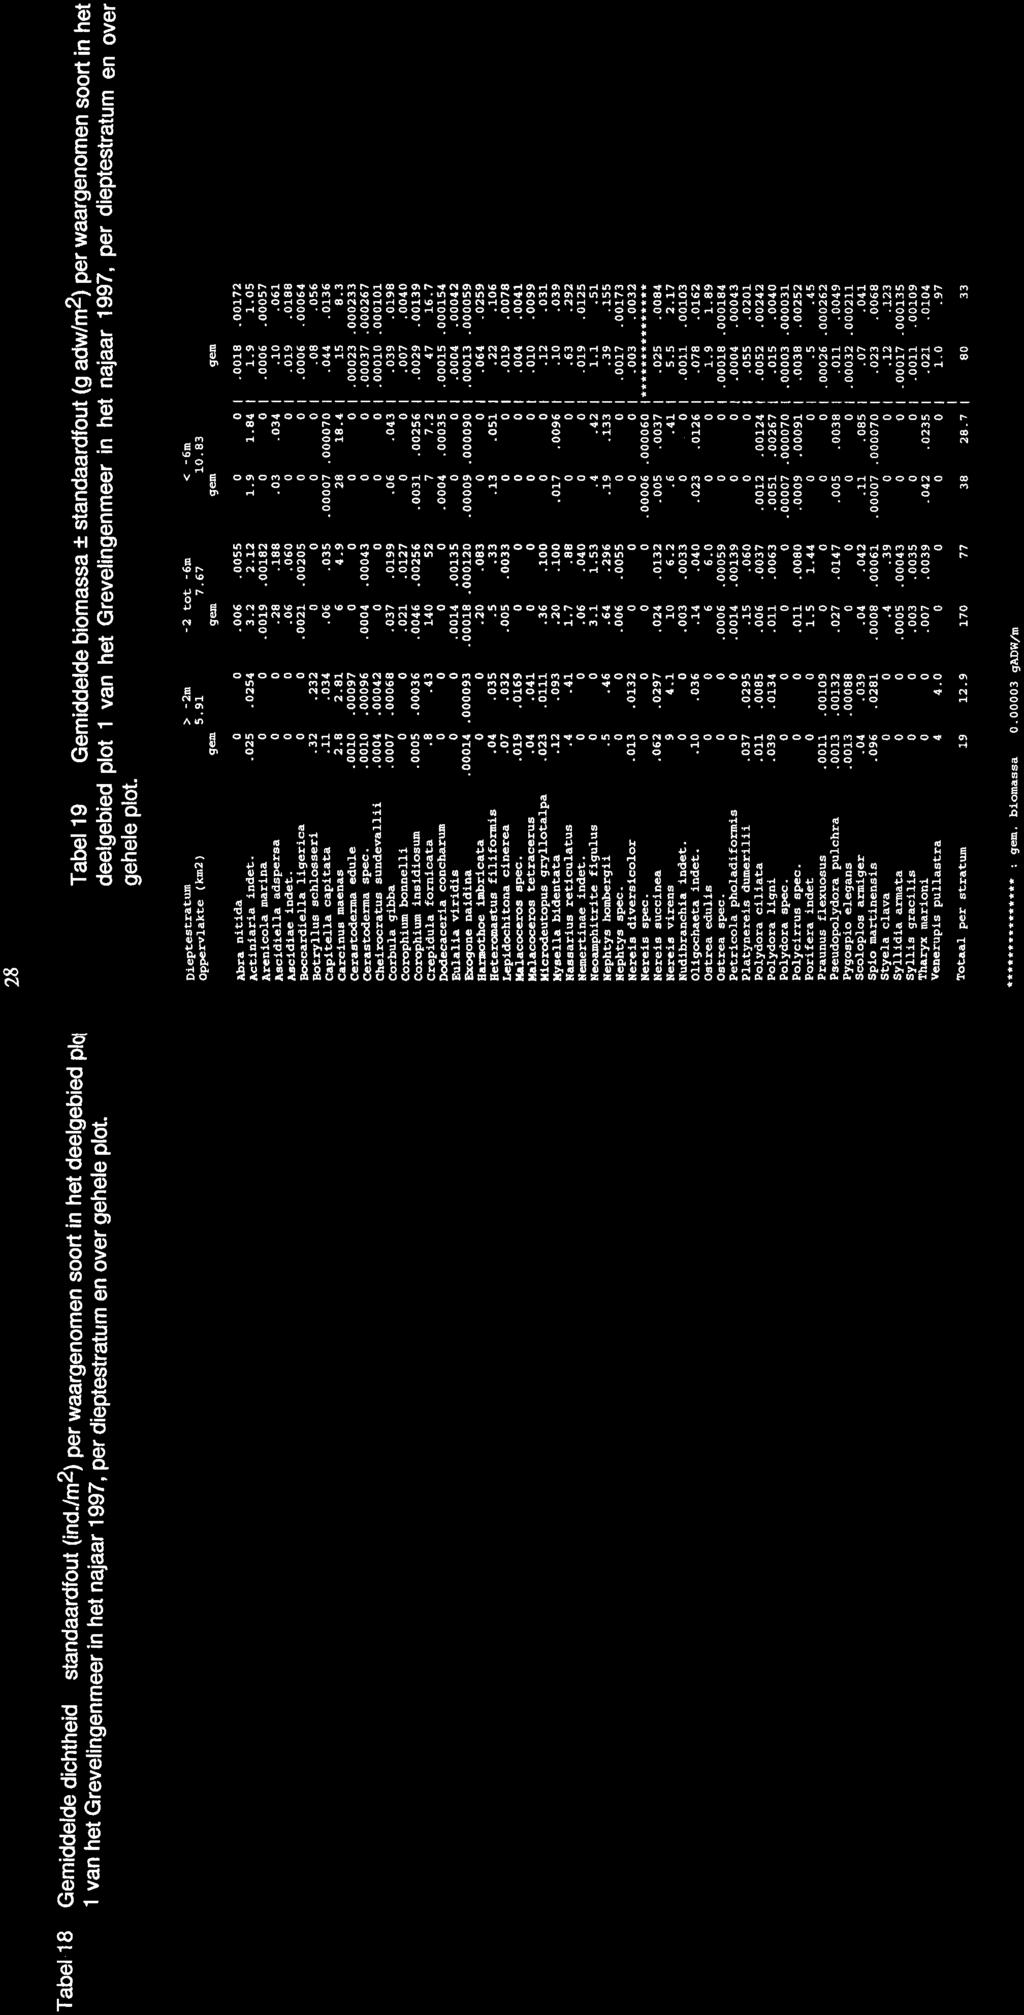 Tabel 18 Gemiddelde dichtheid k standaardfout (ind./m2) per waargenomen soort in het deelgebied plq 1 van het Grevelingenmeer in het najaar 1997, per dieptestratum en over gehele plot.